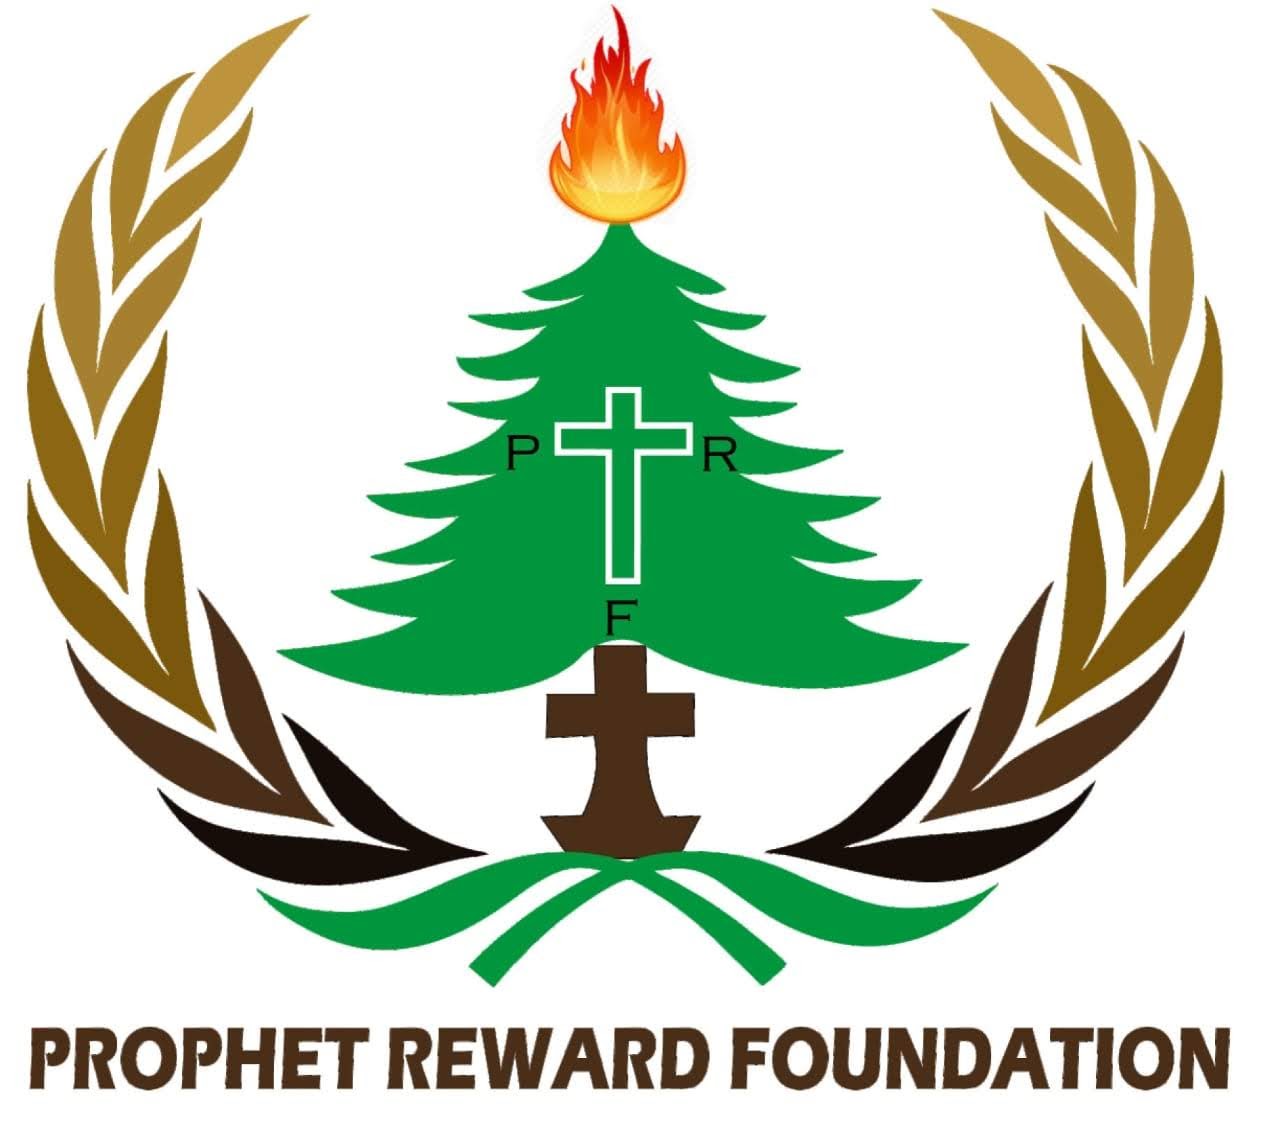 PROPHET REWARD FOUNDATION (PRF)